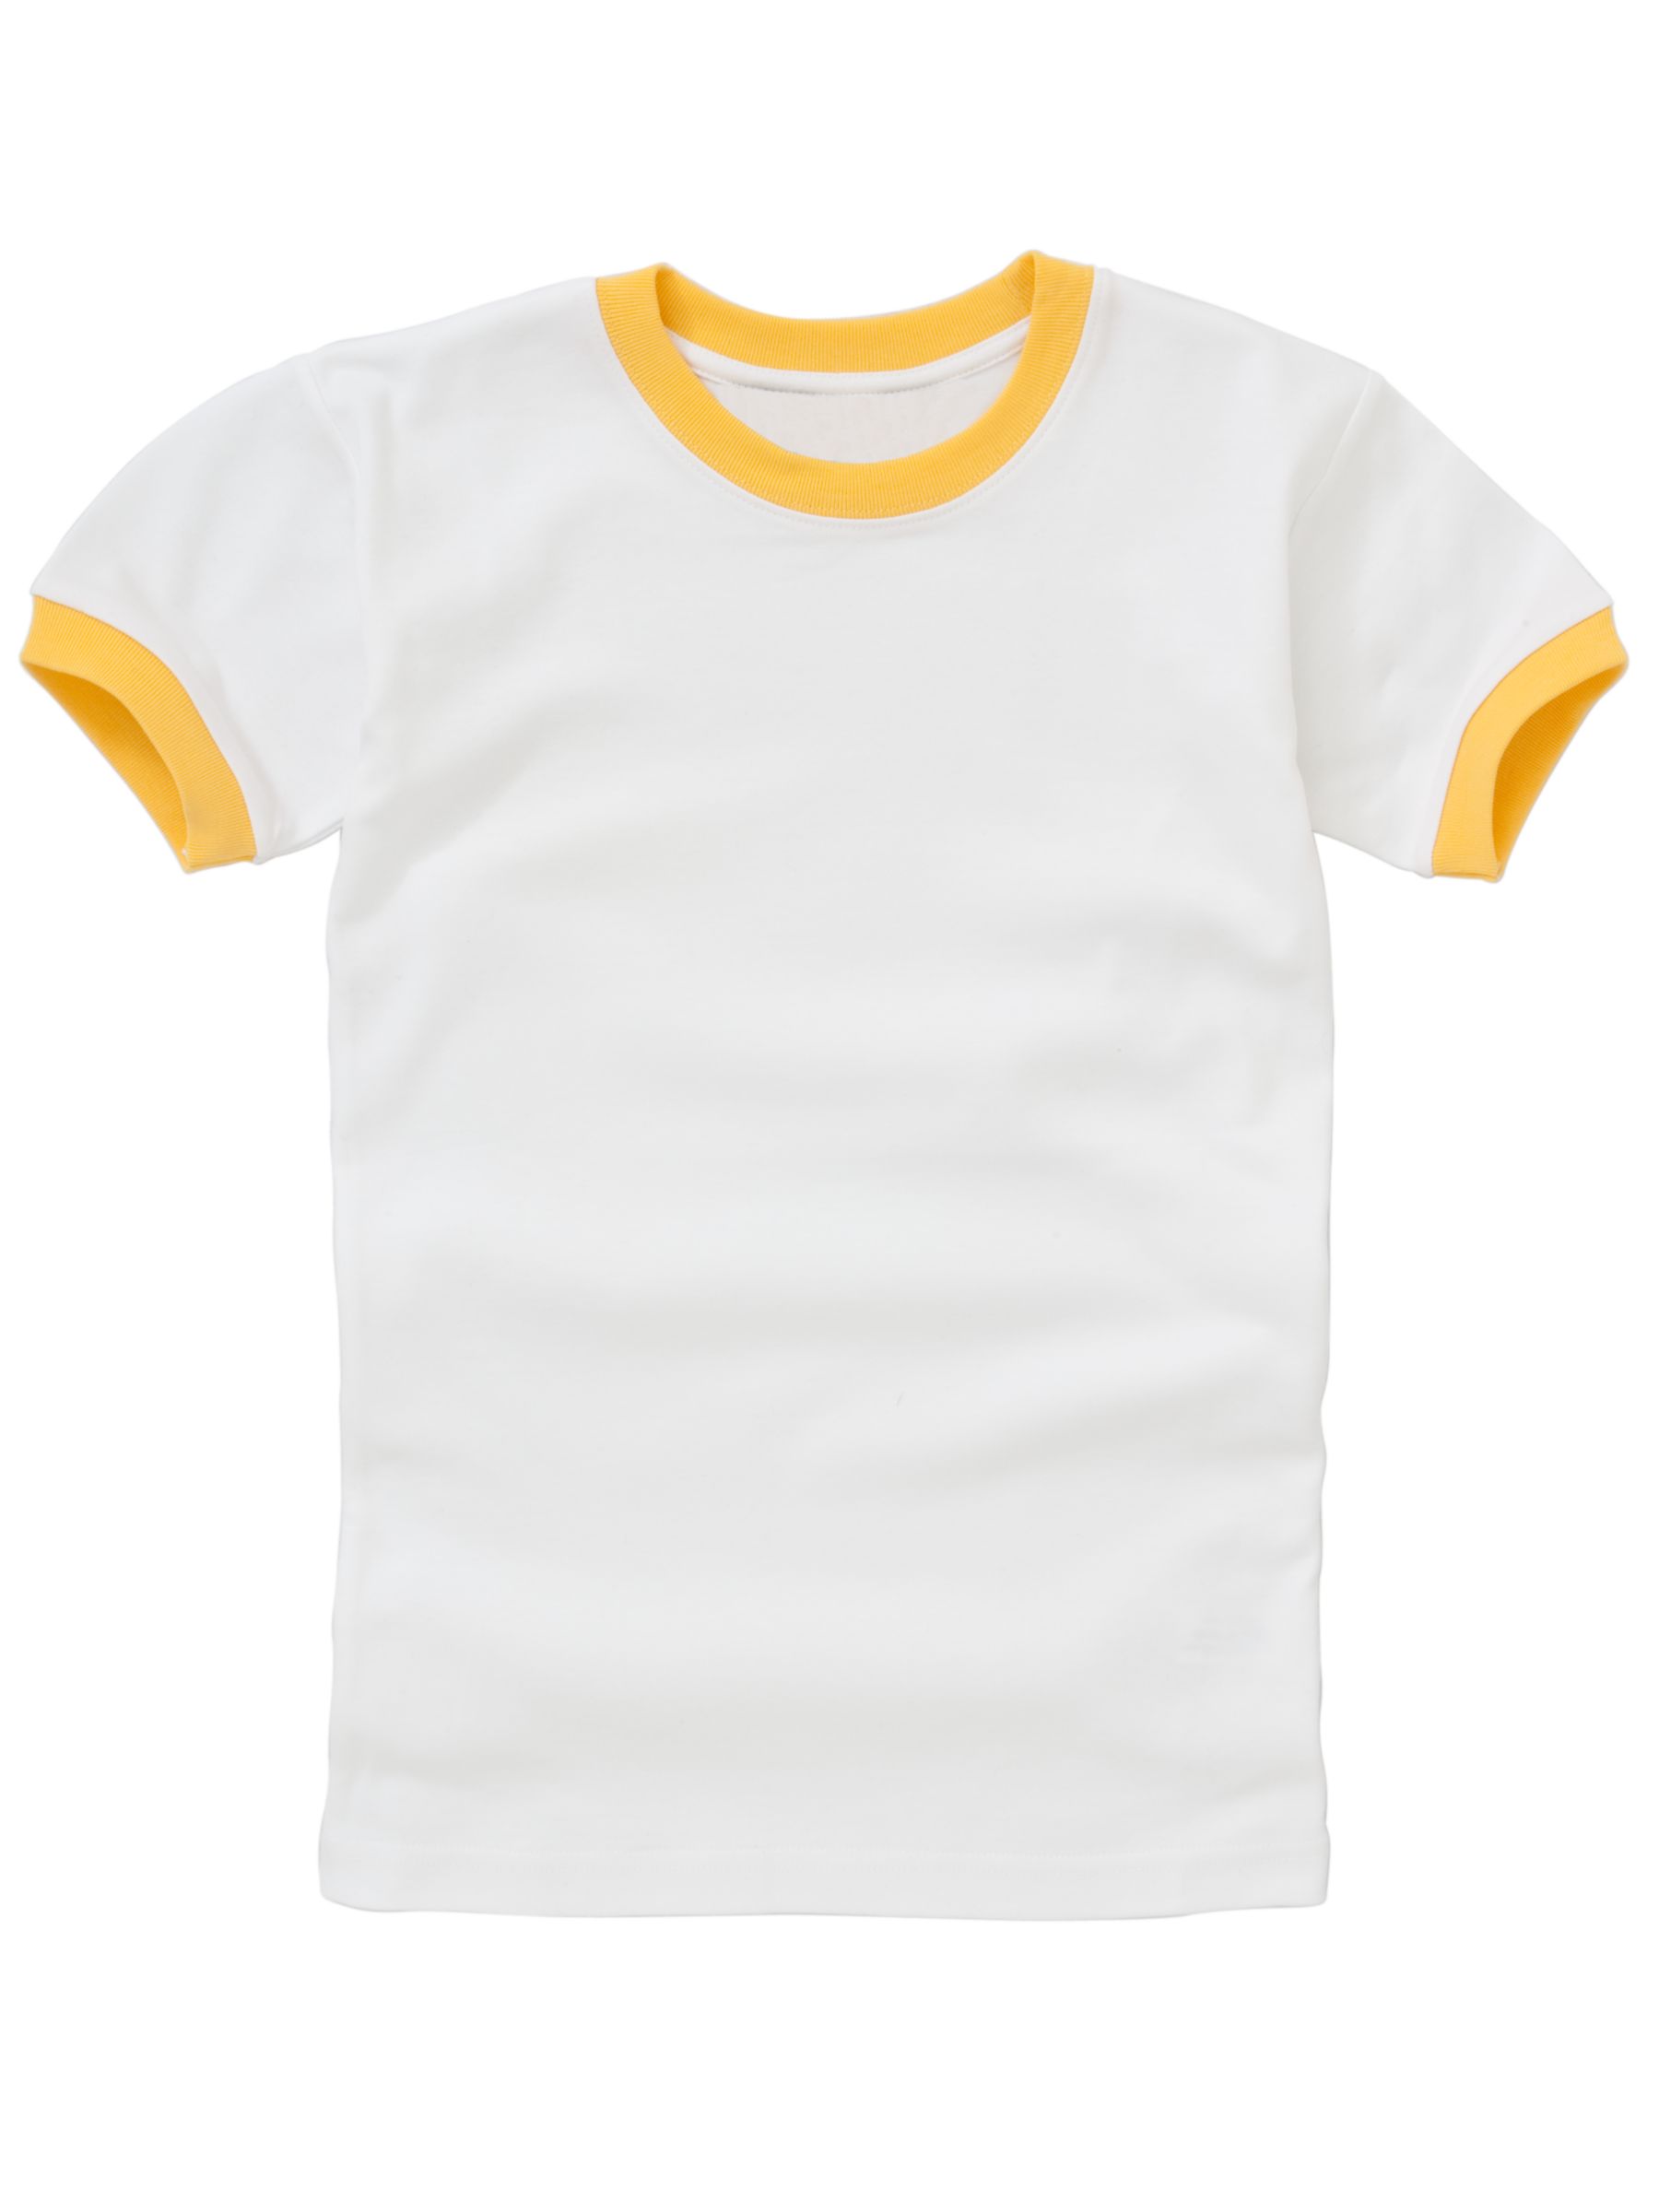 School Unisex House PE T-Shirt, White/Gold